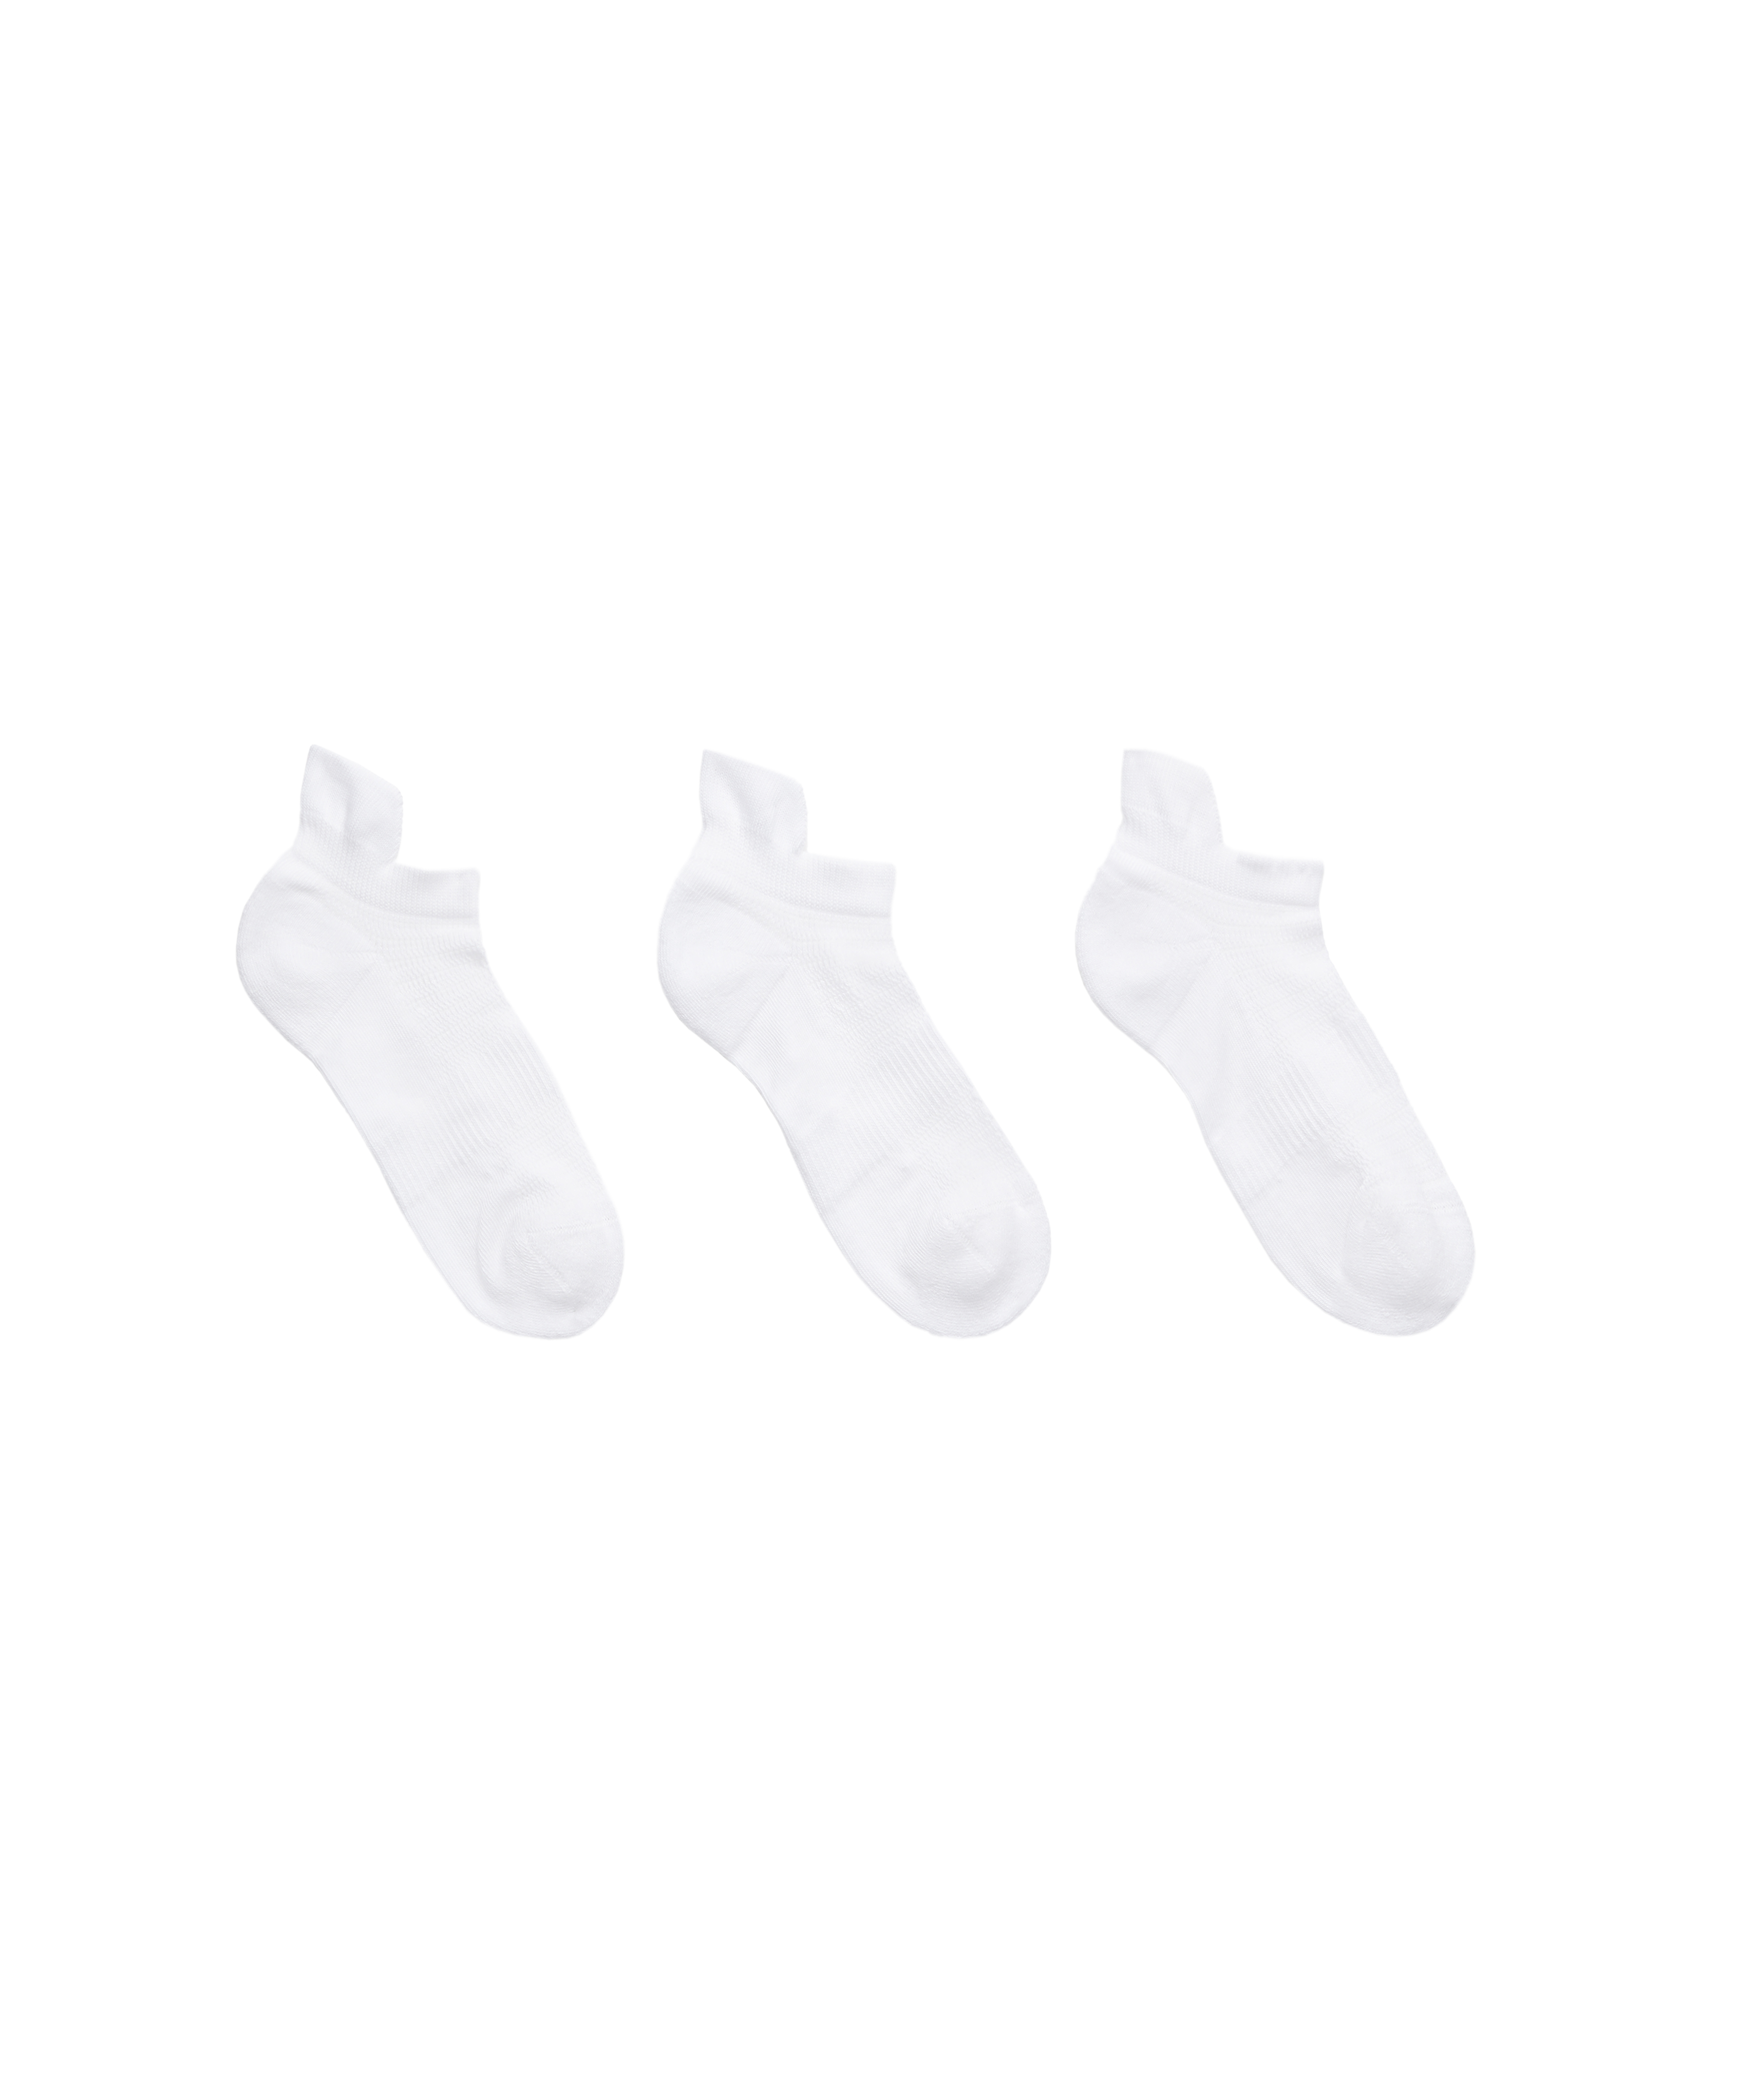 3 pairs of tab cotton blend sports sneaker socks